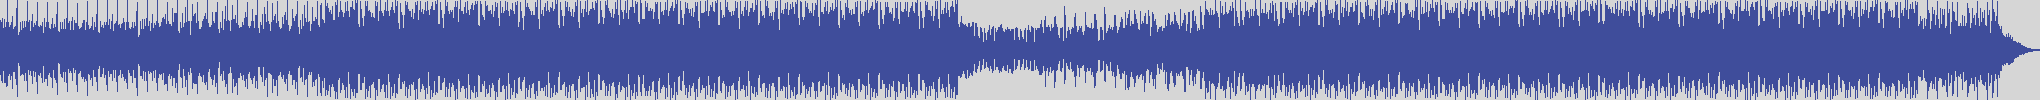 nf_boyz_records [NFY029] Beta Project - Cometa [Shining & Deep Mix] audio wave form